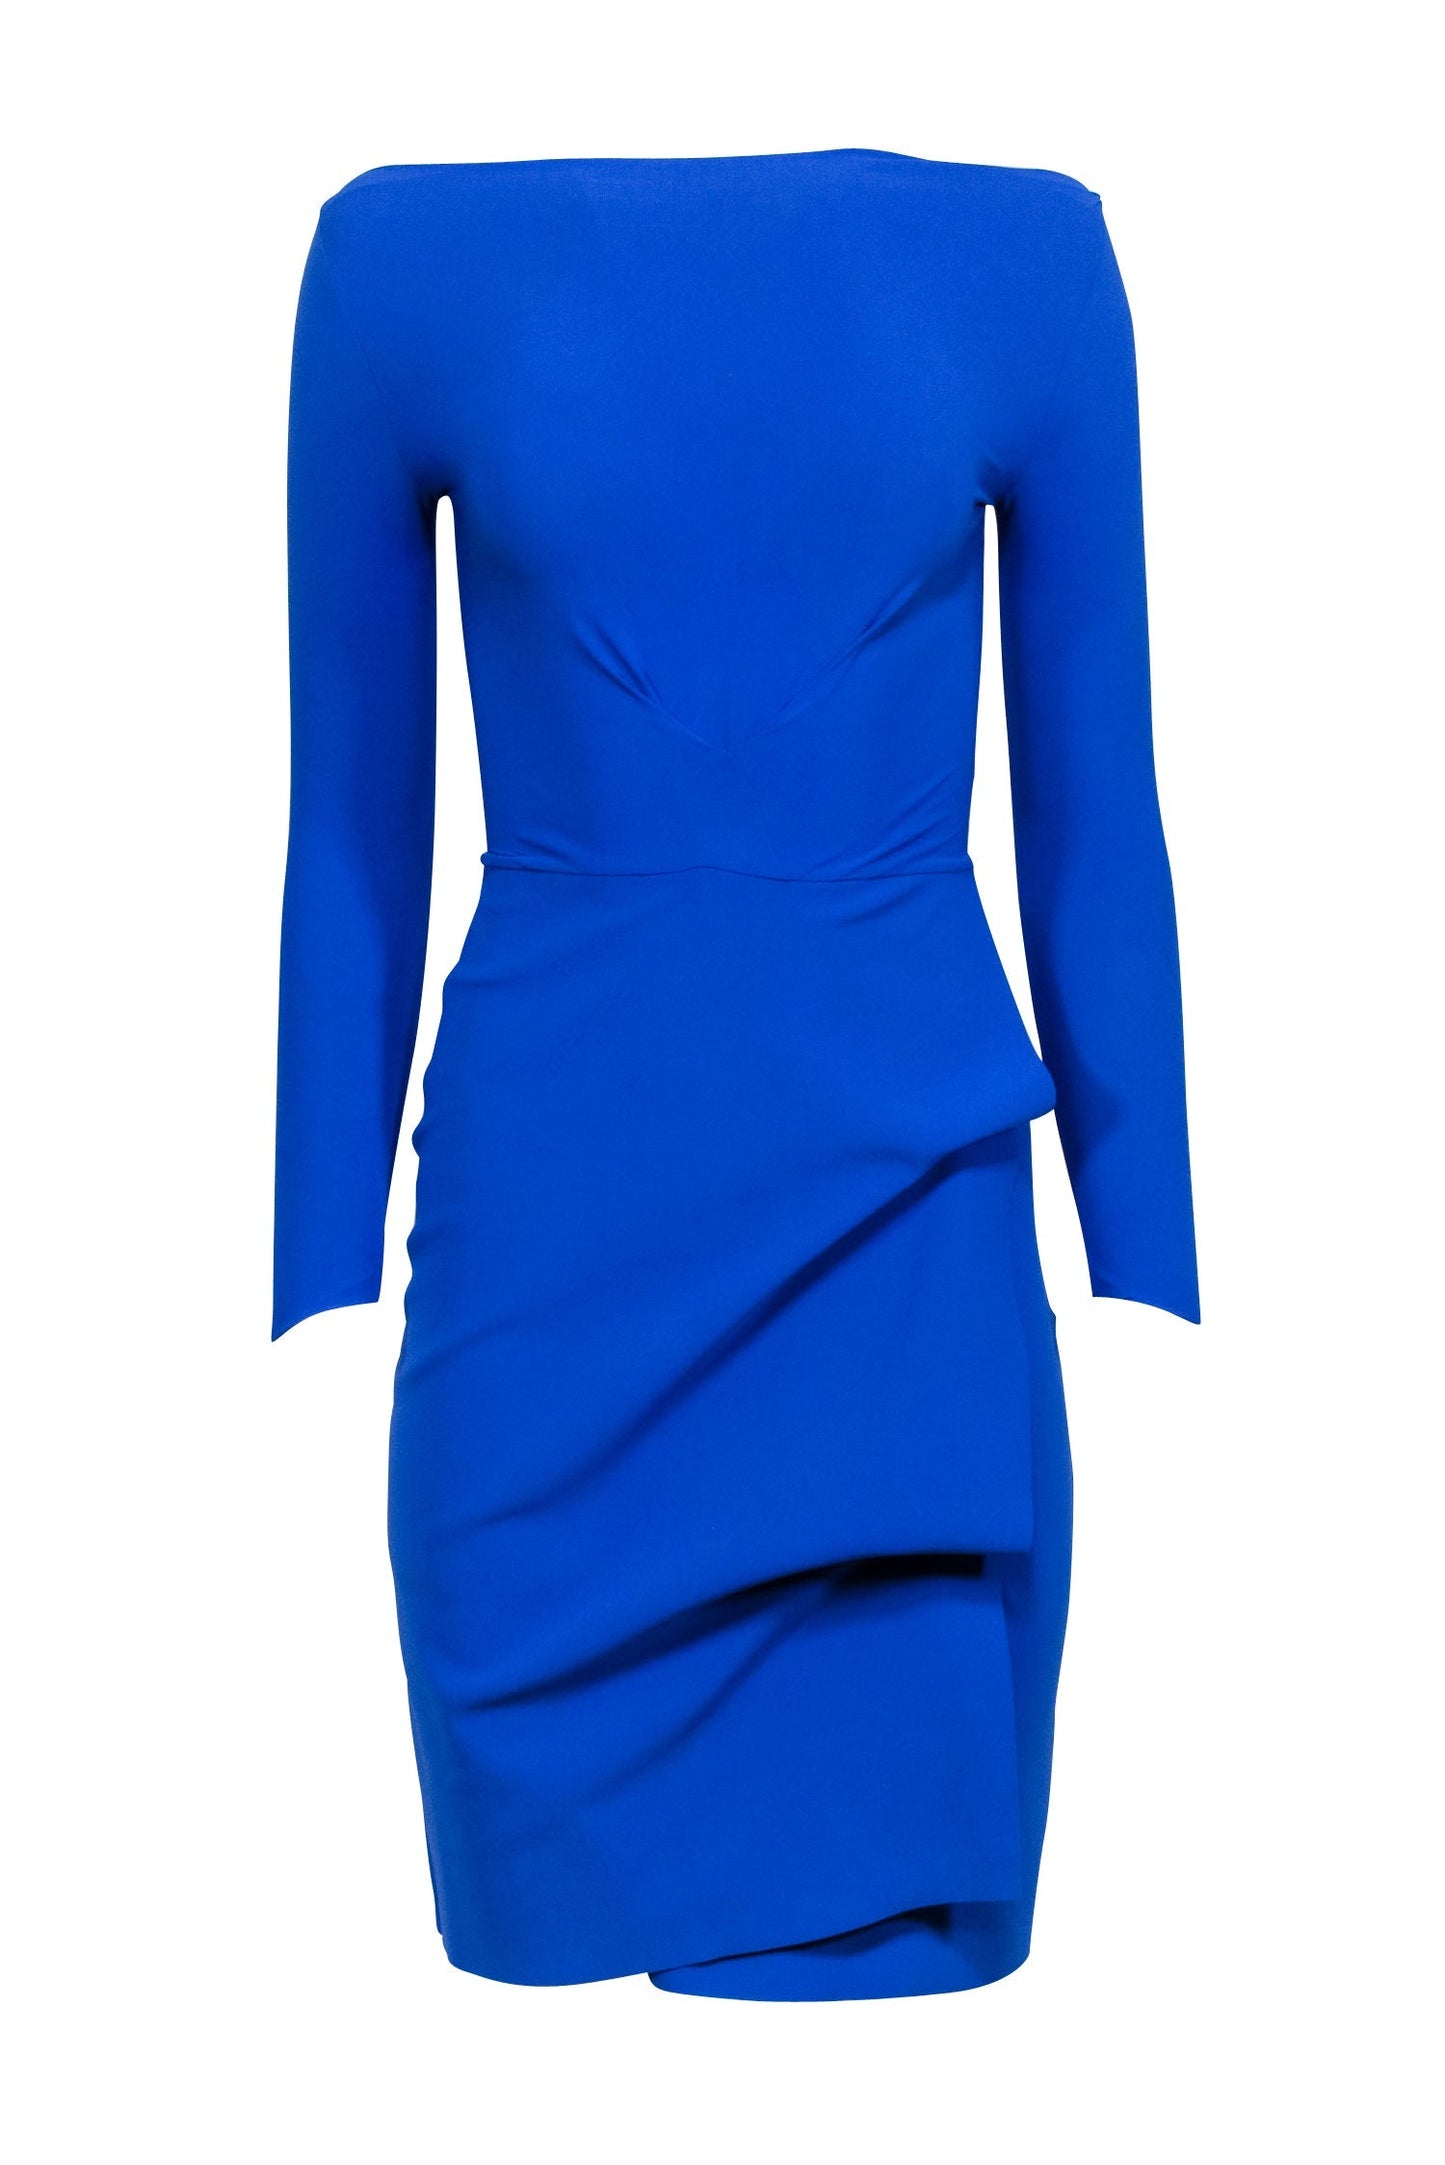 Chiara Boni - Cobalt Blue Long Sleeve Dress Sz 2